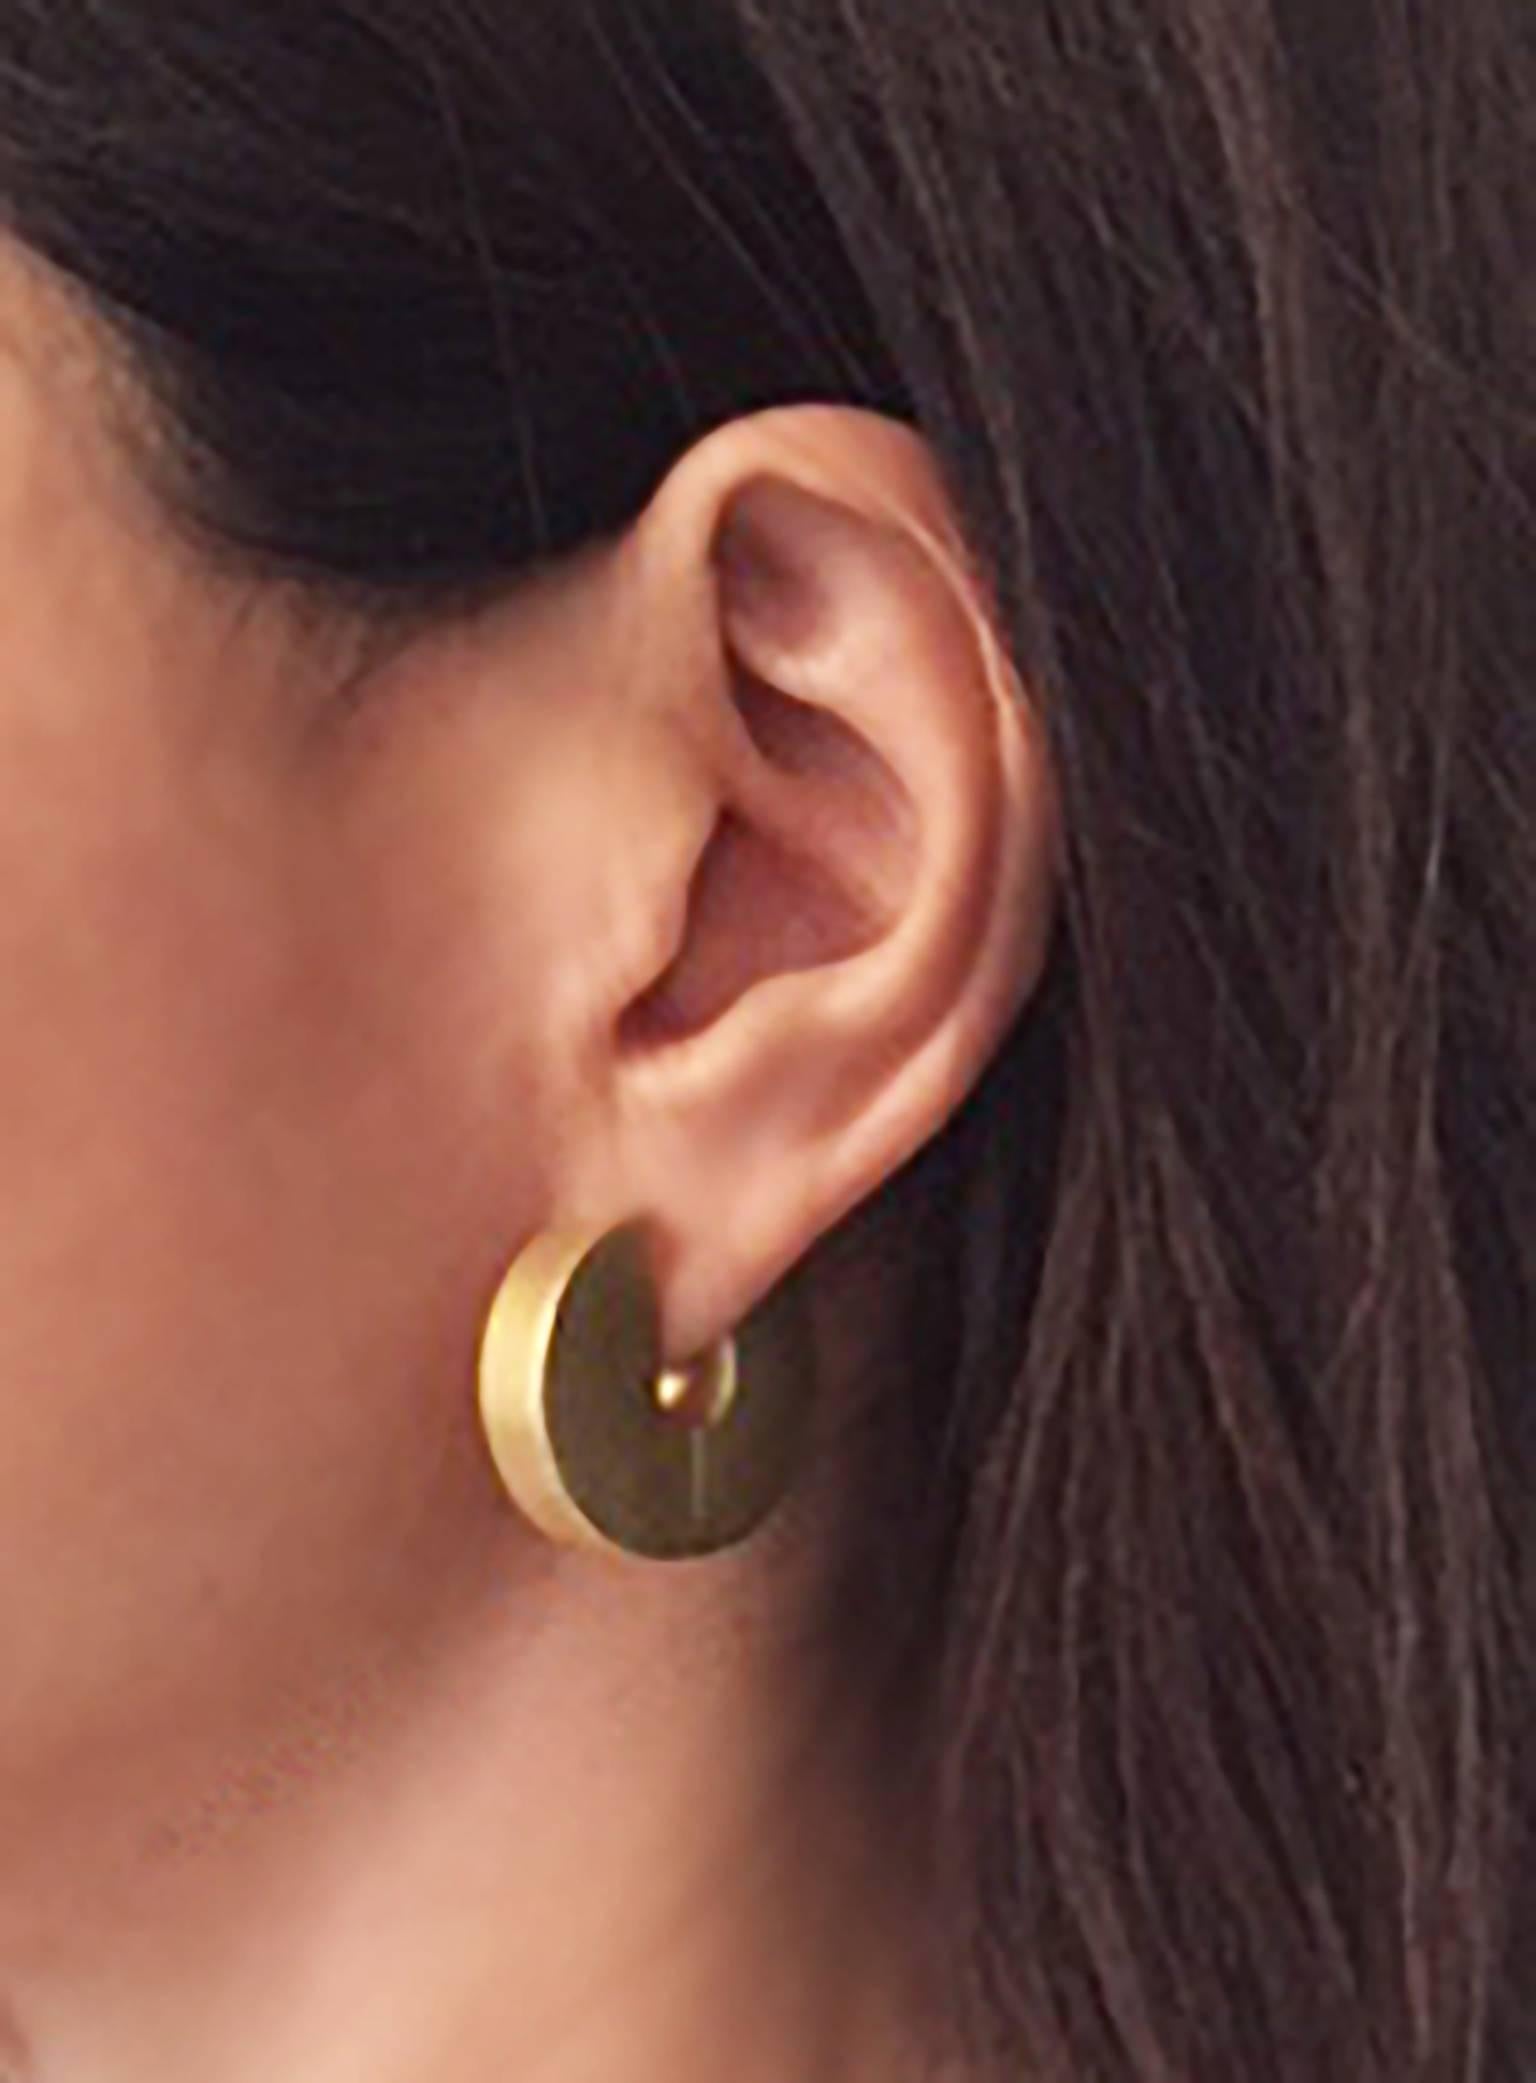 Metal: 18K Yellow Gold
Earring Diameter: approximately 1